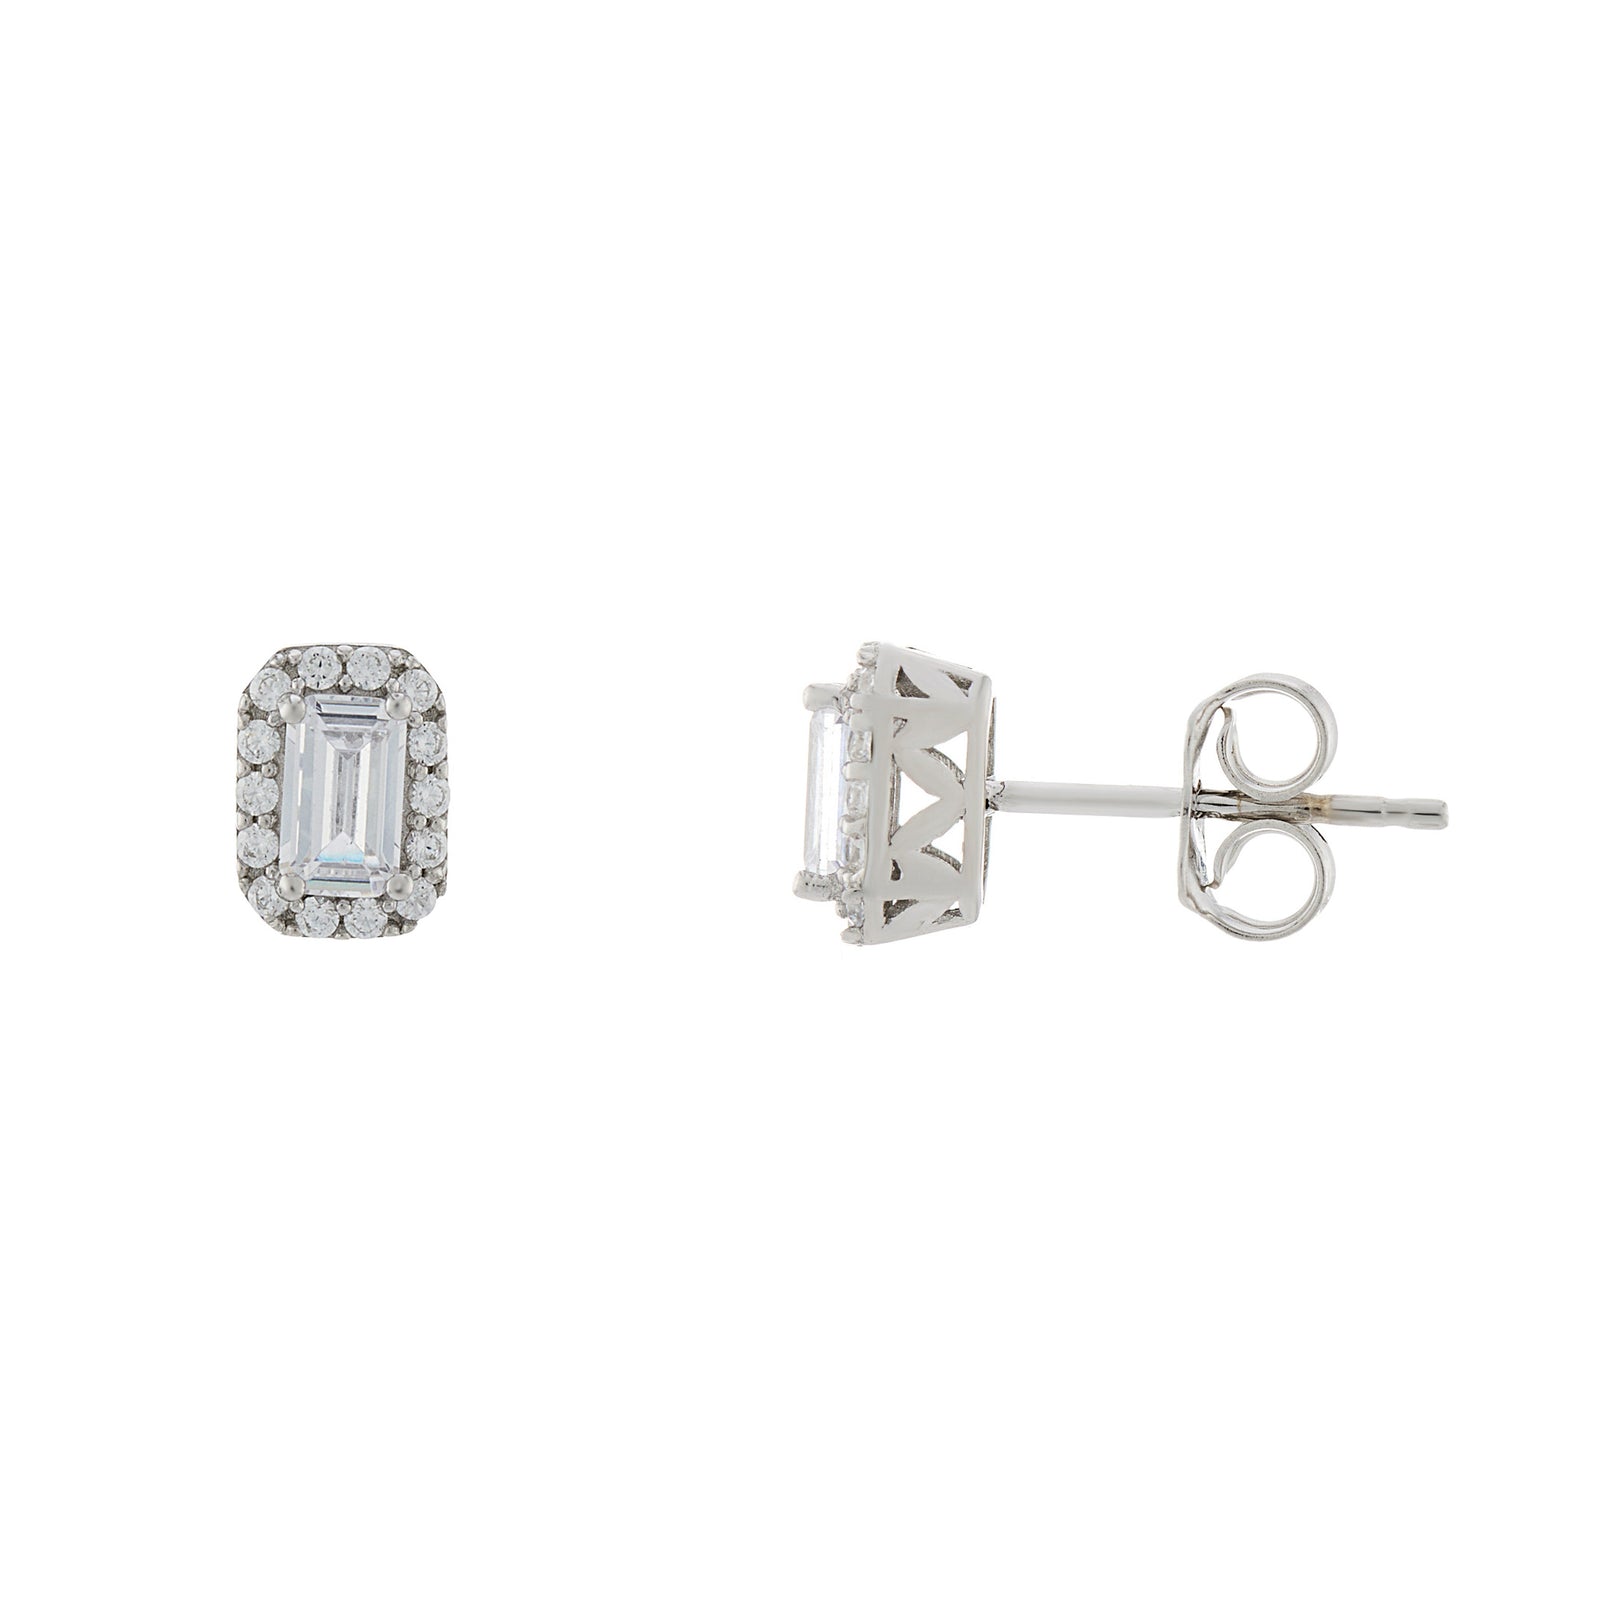 9ct white gold rectangular cz & cz cluster stud earrings